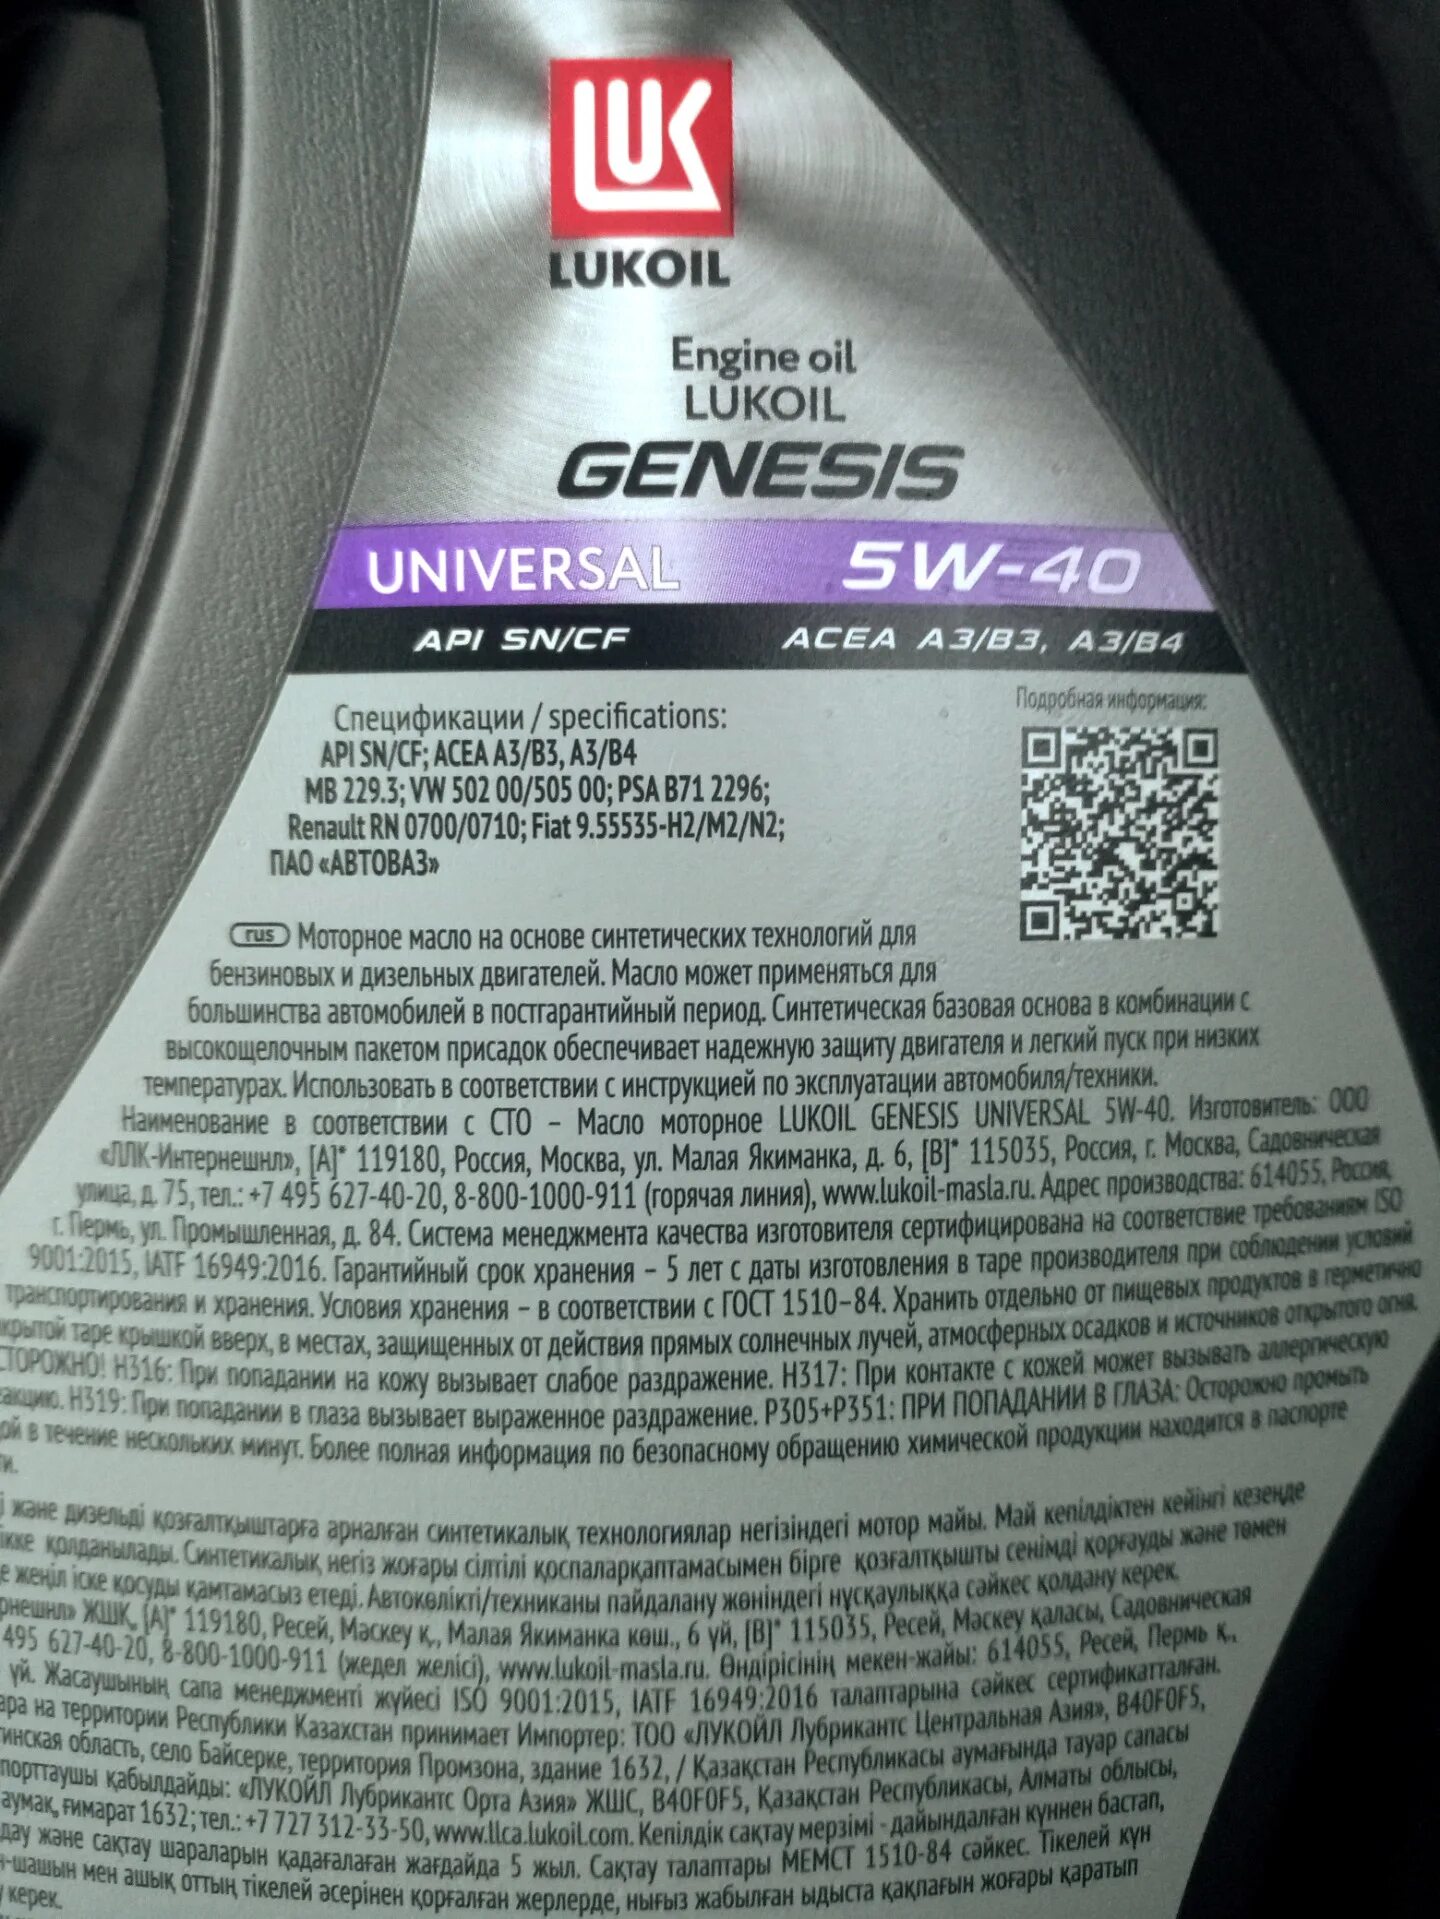 Масло генезис универсал 5w40. Лукойл Genesis Universal 5w40. Genesis Universal 5w-40. Lukoil Genesis Universal 5w-40. Лукойл масла Genesis Universal.